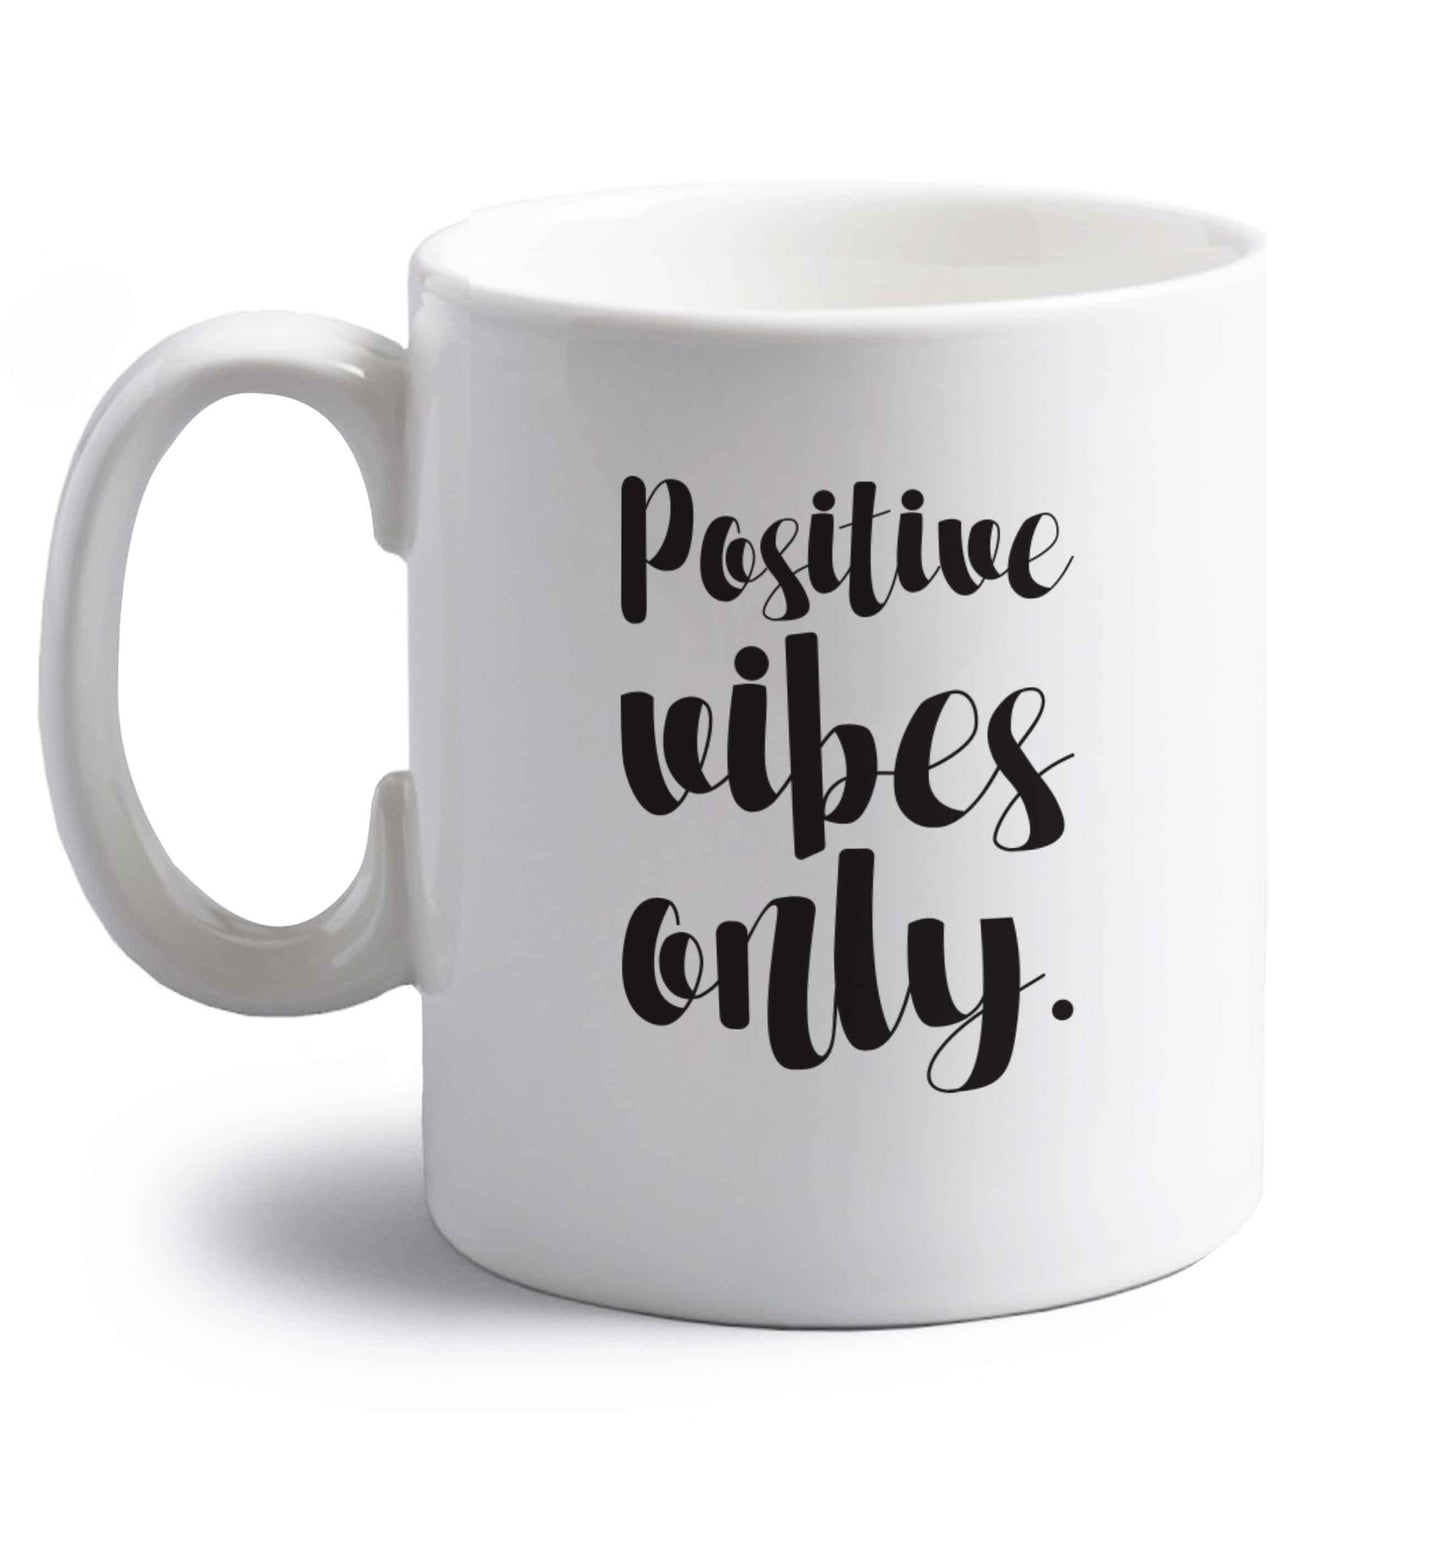 Positive vibes only right handed white ceramic mug 